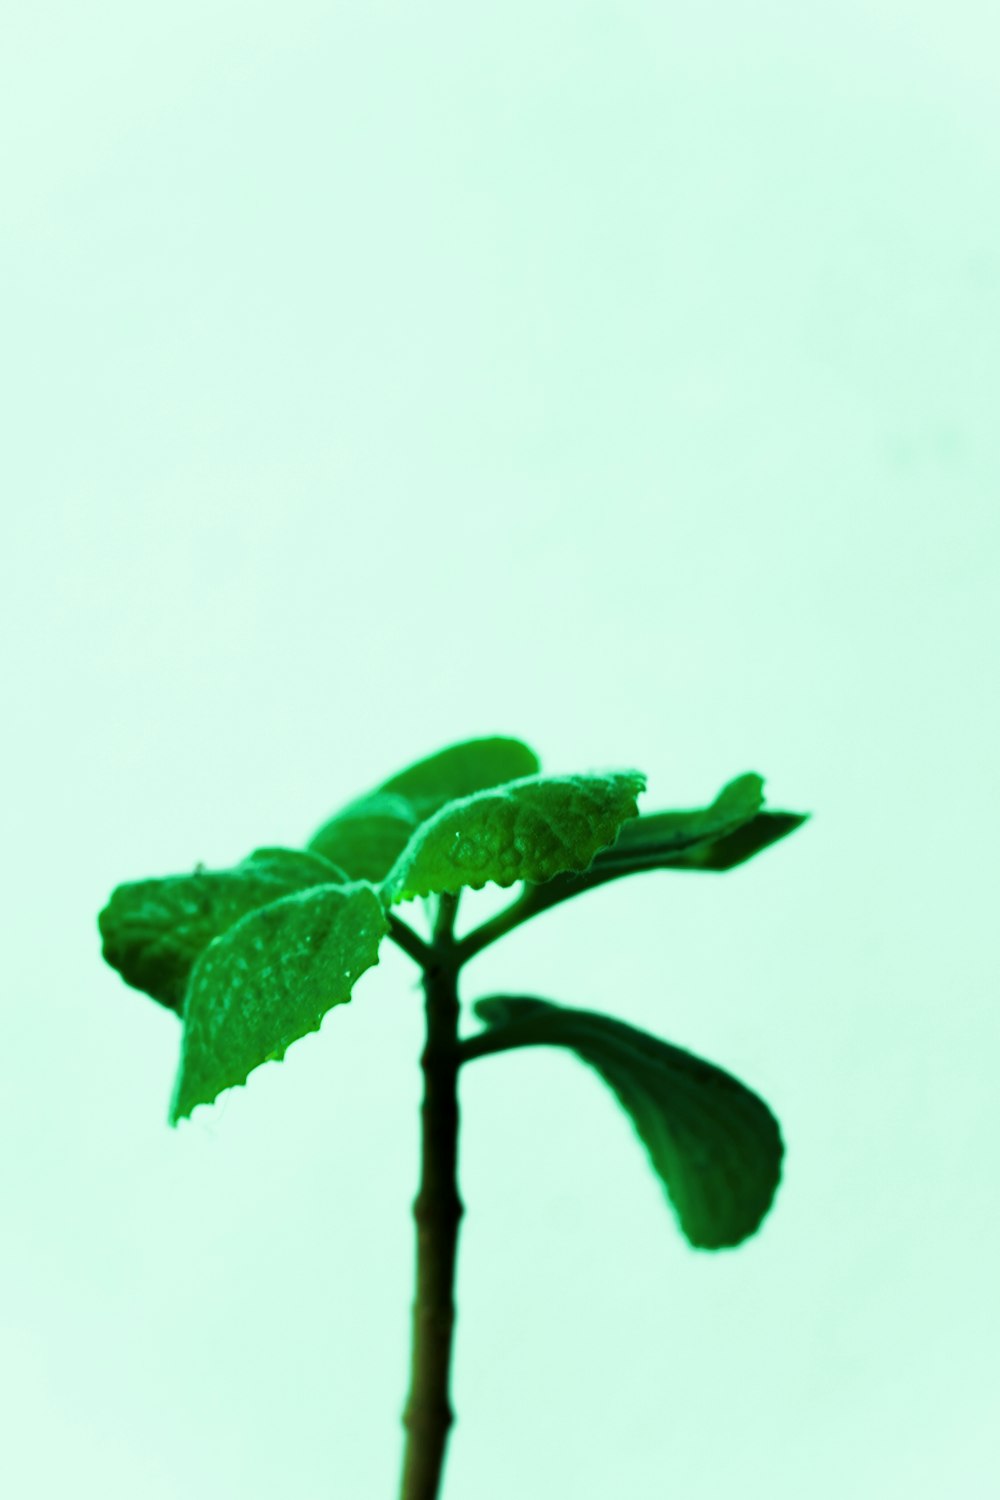 une petite plante verte avec des feuilles dessus